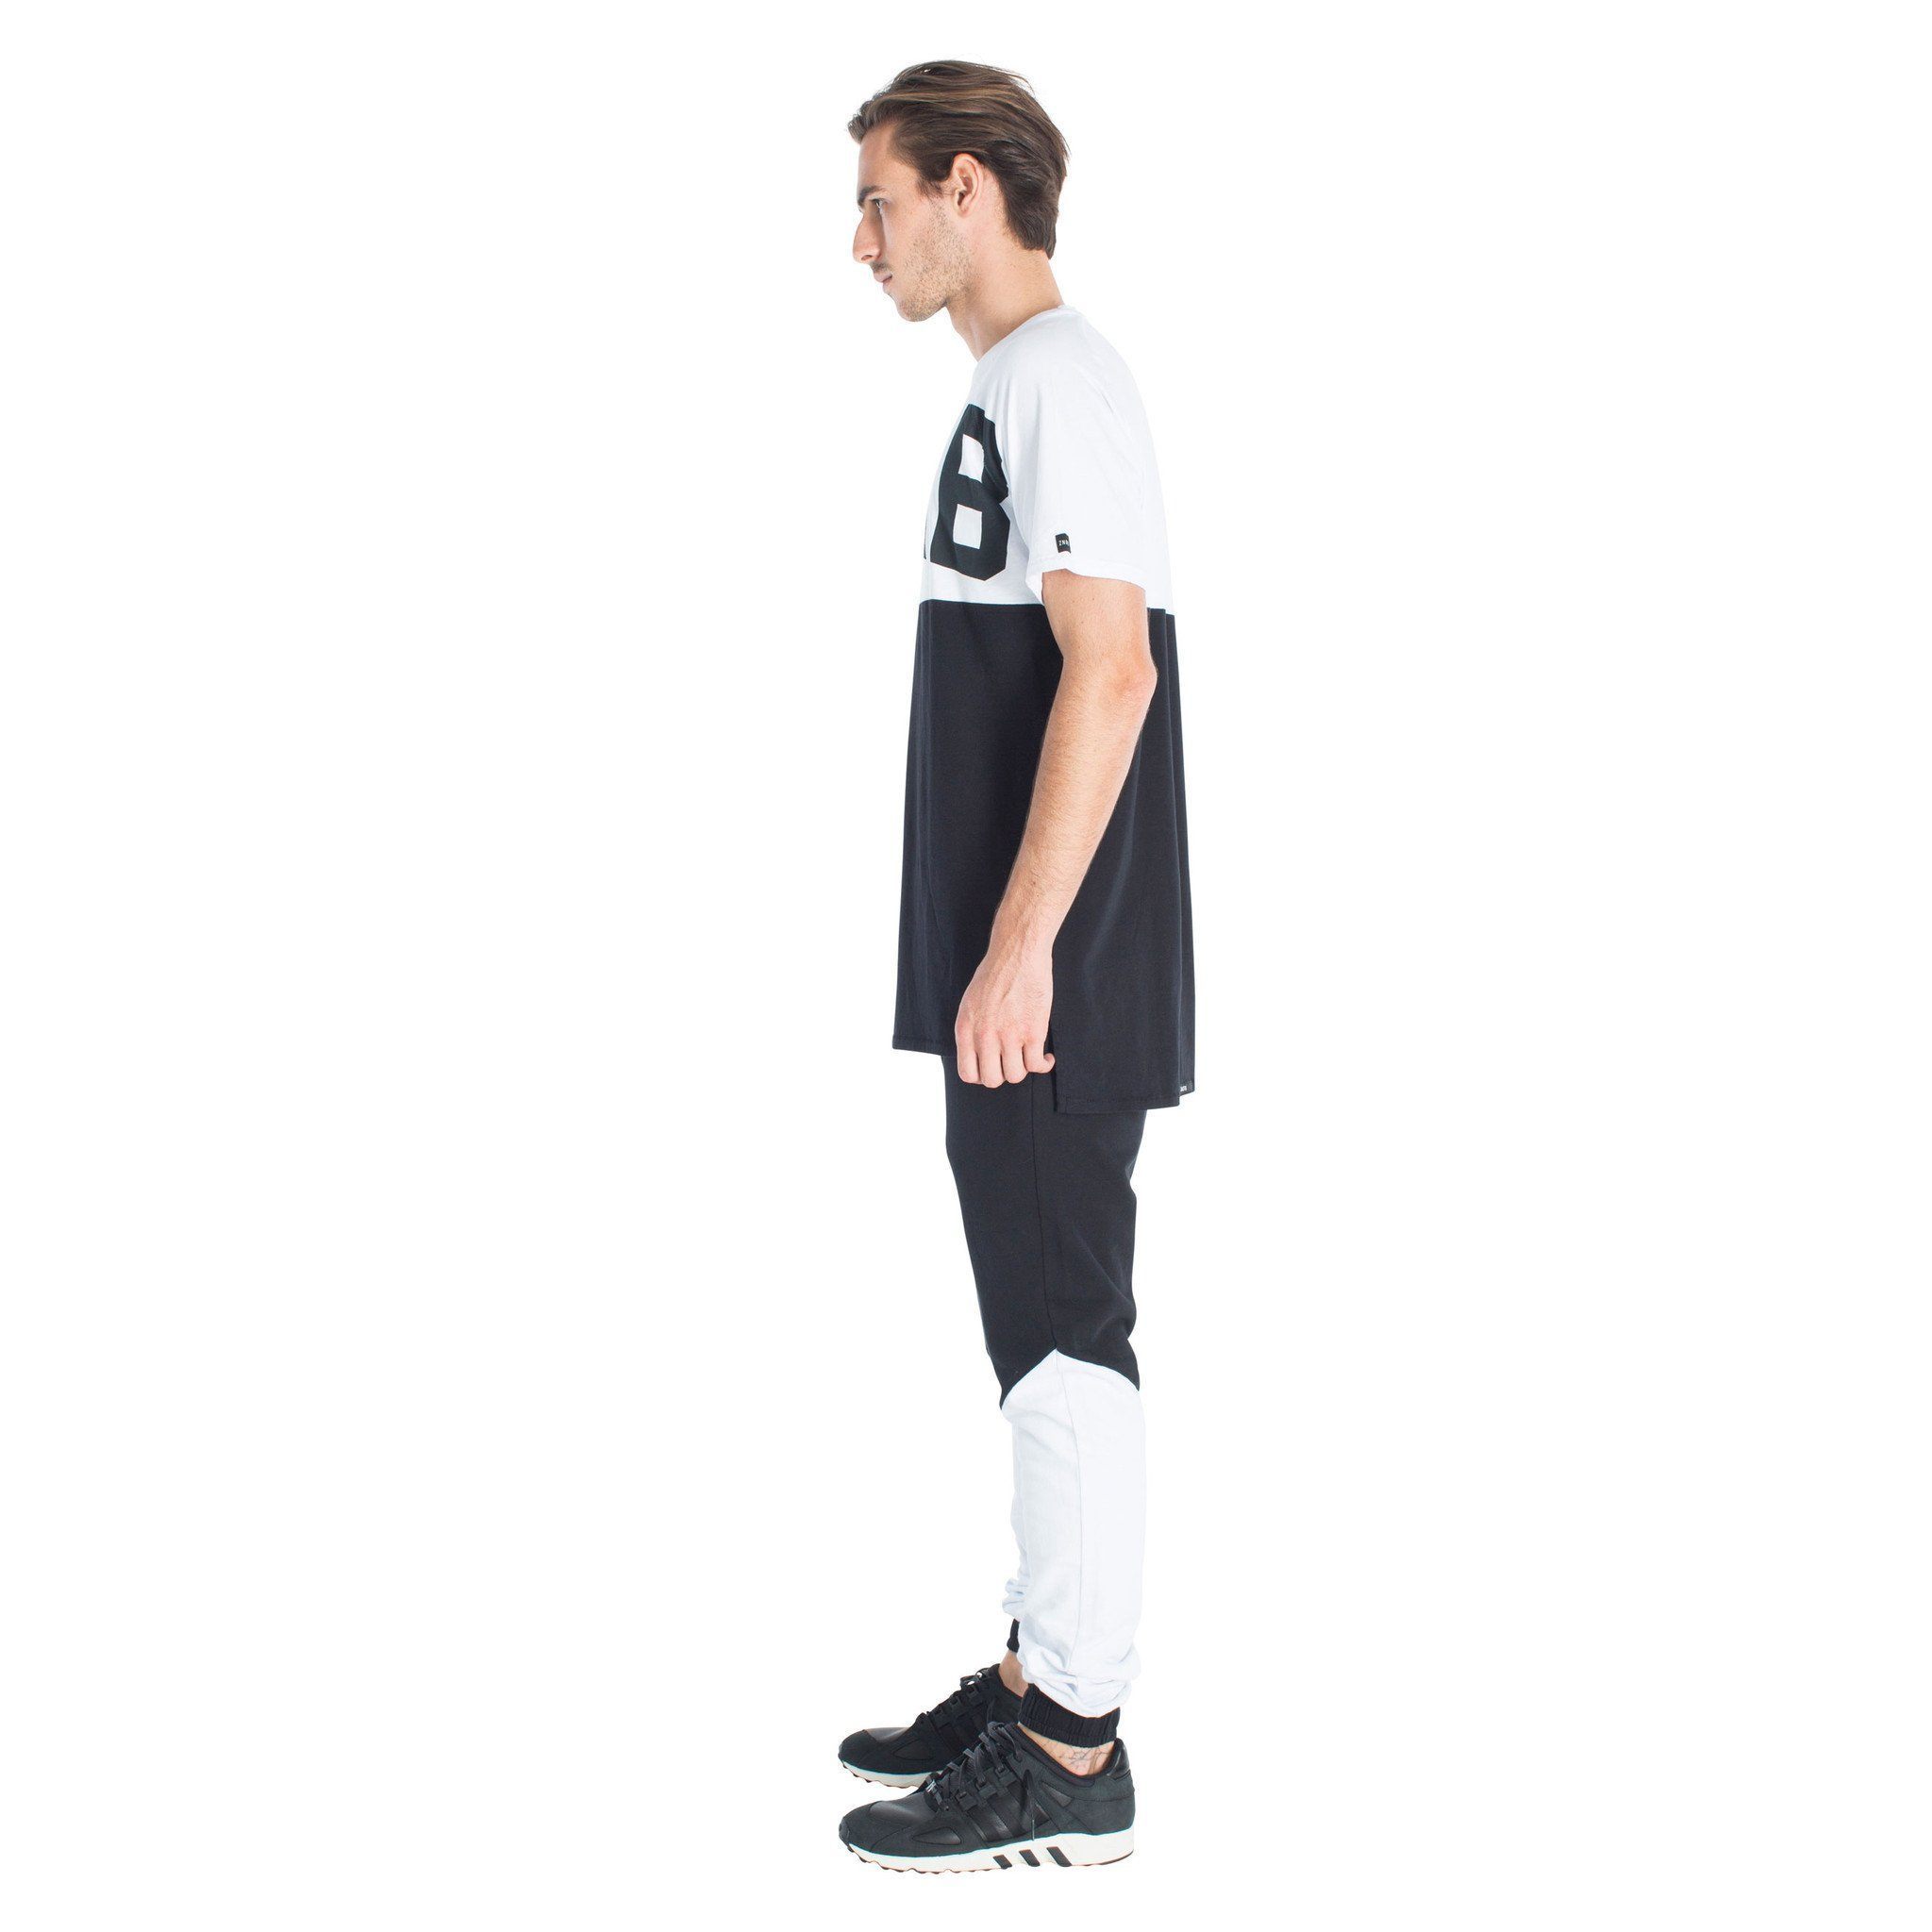 CLOTHING - Zanerobe Team Print Tee White Black 125-MOV